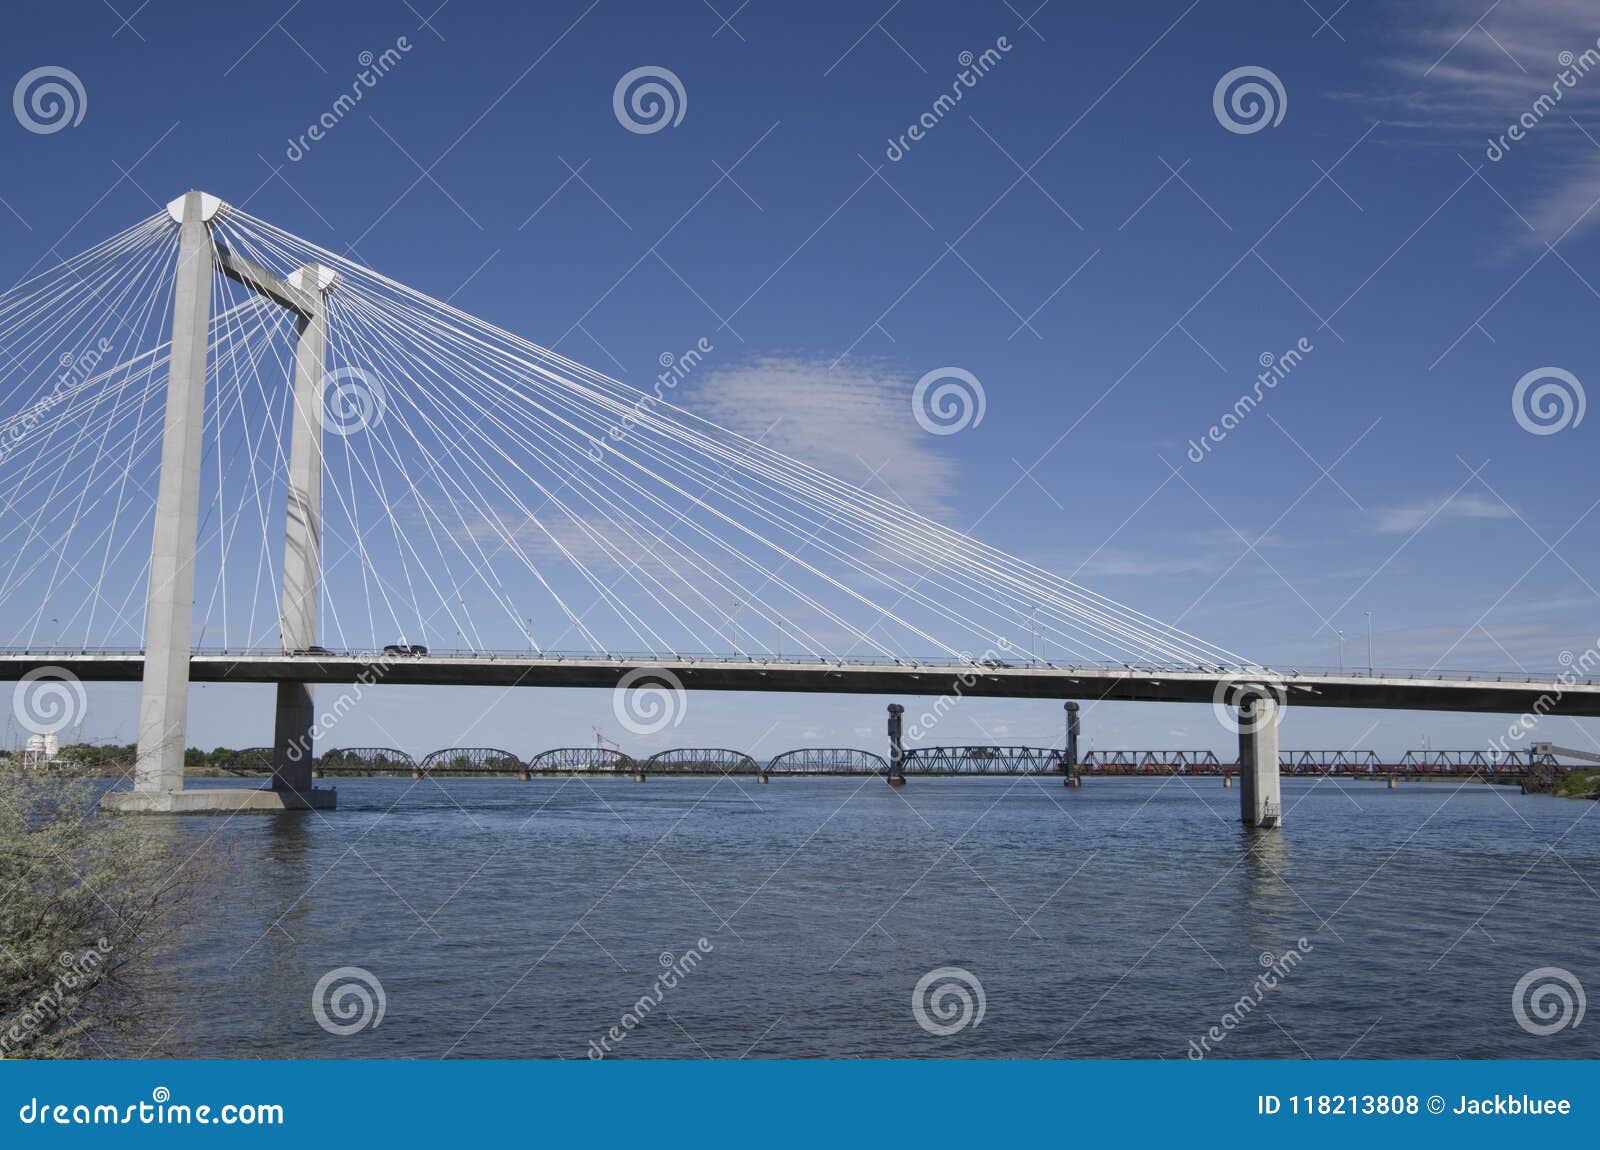 bridges on columbia river, pasco, tri-cities